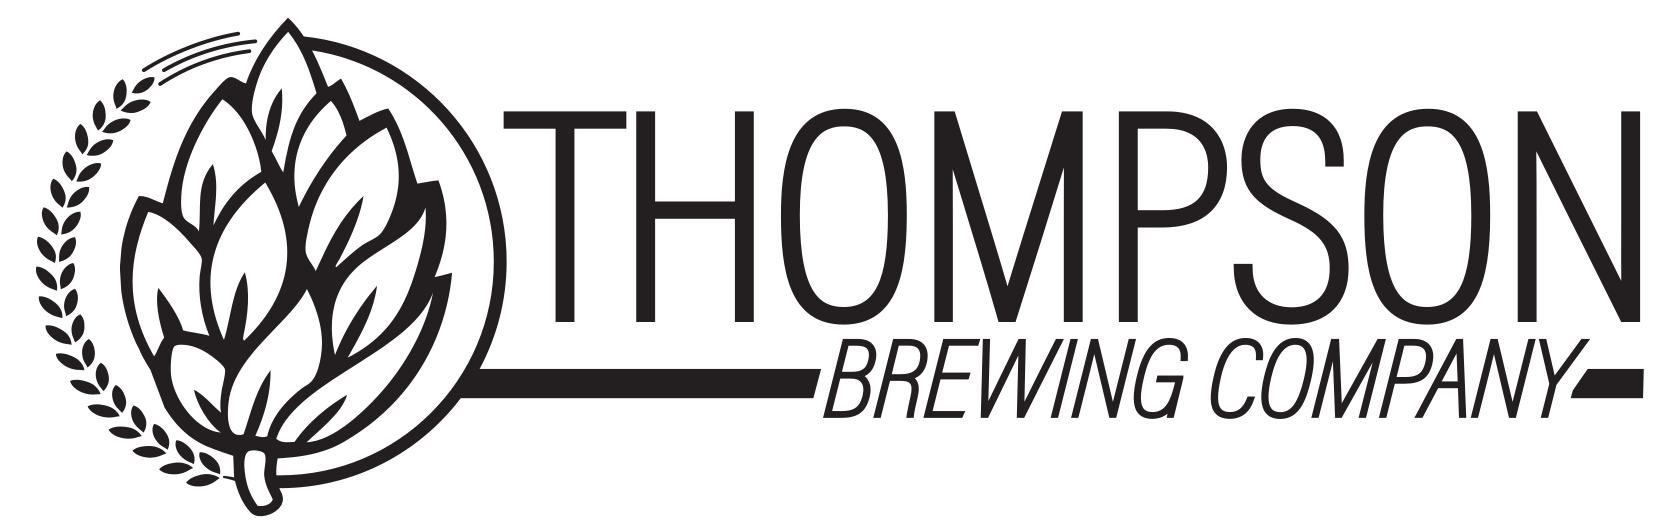 Thompson Brewing